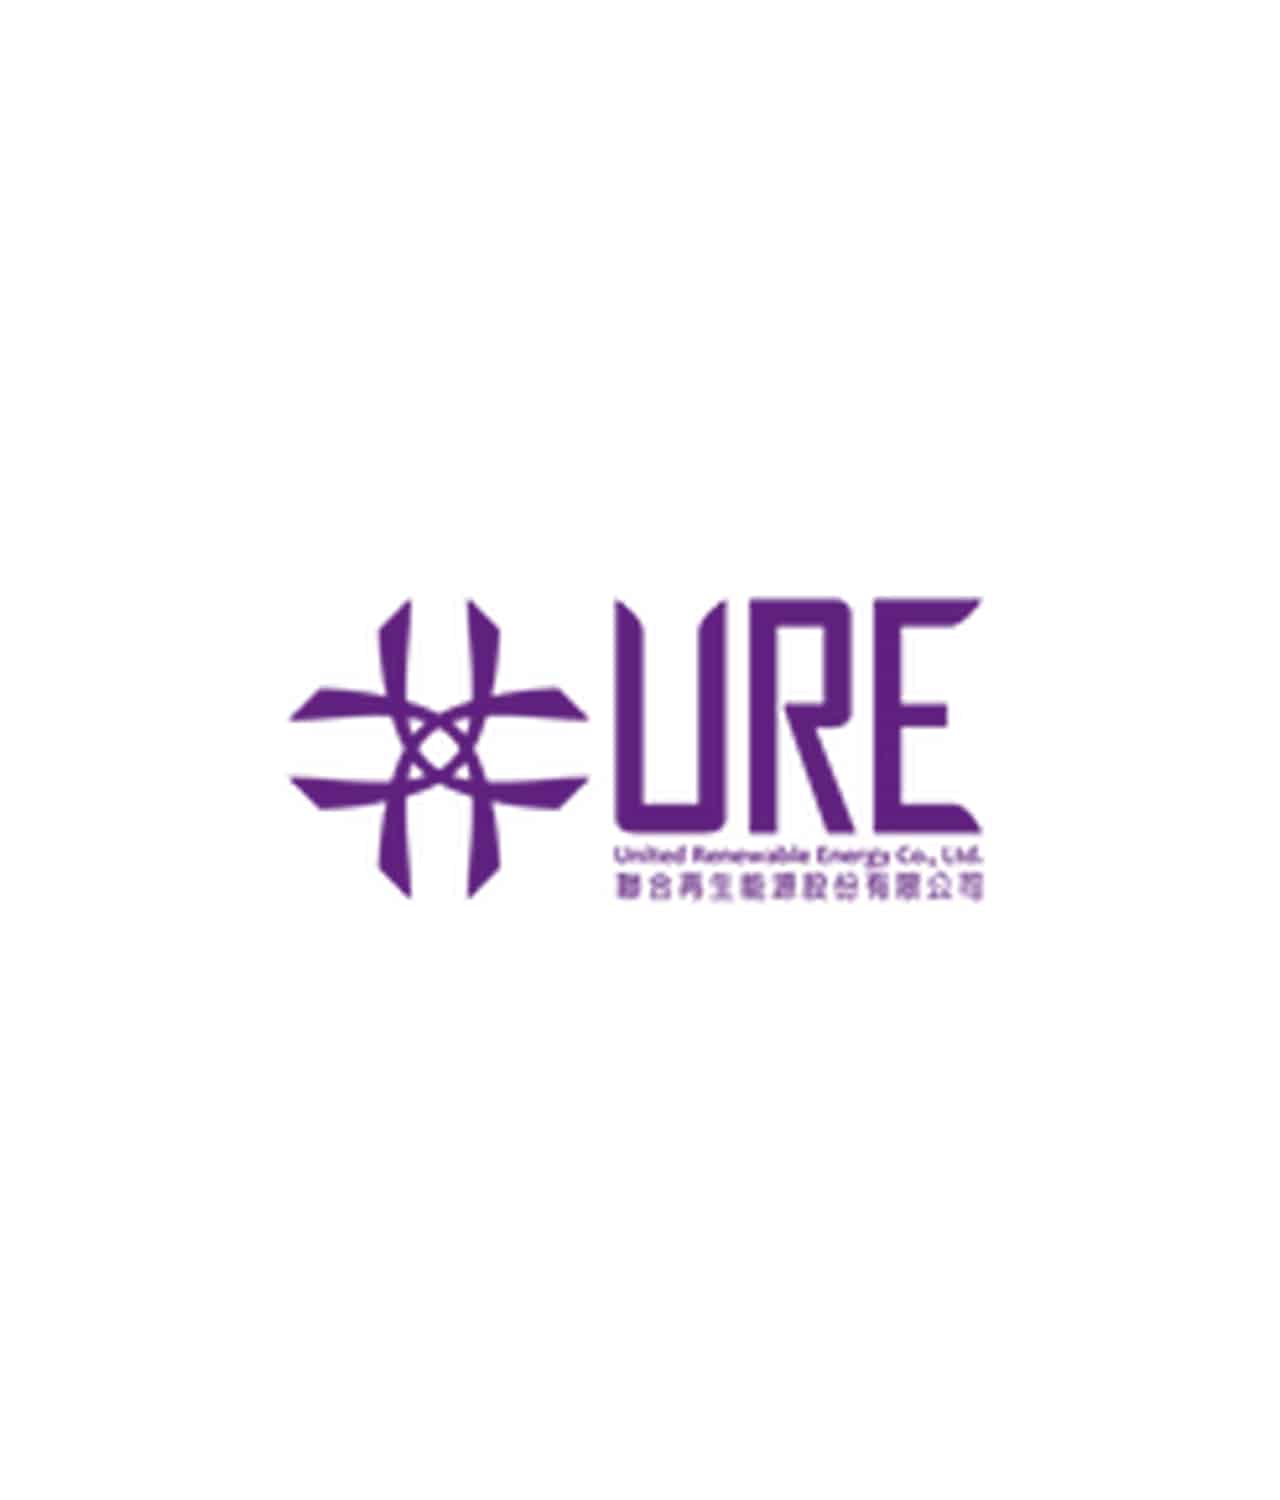 Ure Logo - URE Archives